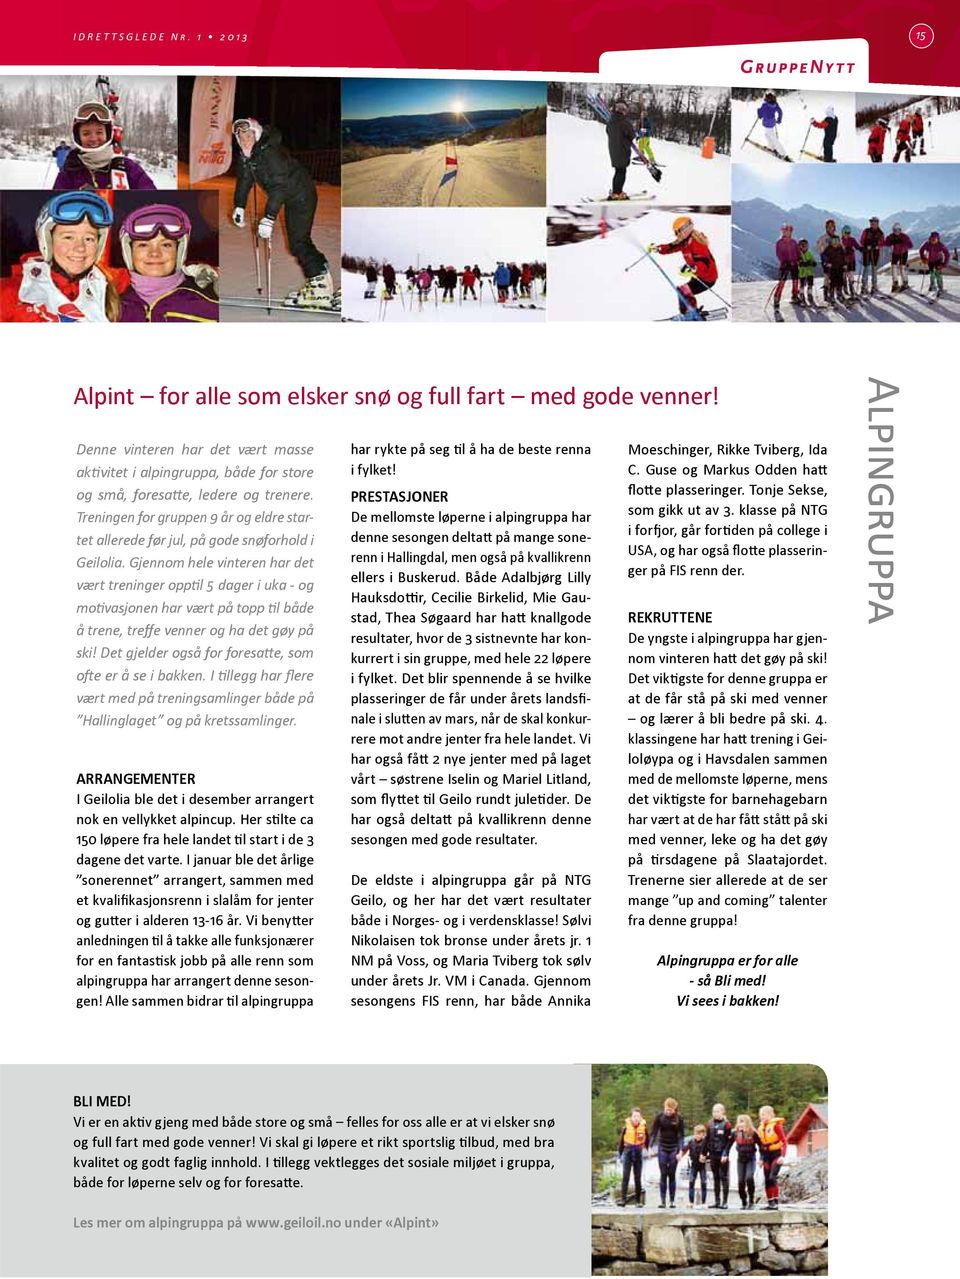 Treningen for gruppen 9 år og eldre startet allerede før jul, på gode snøforhold i Geilolia.